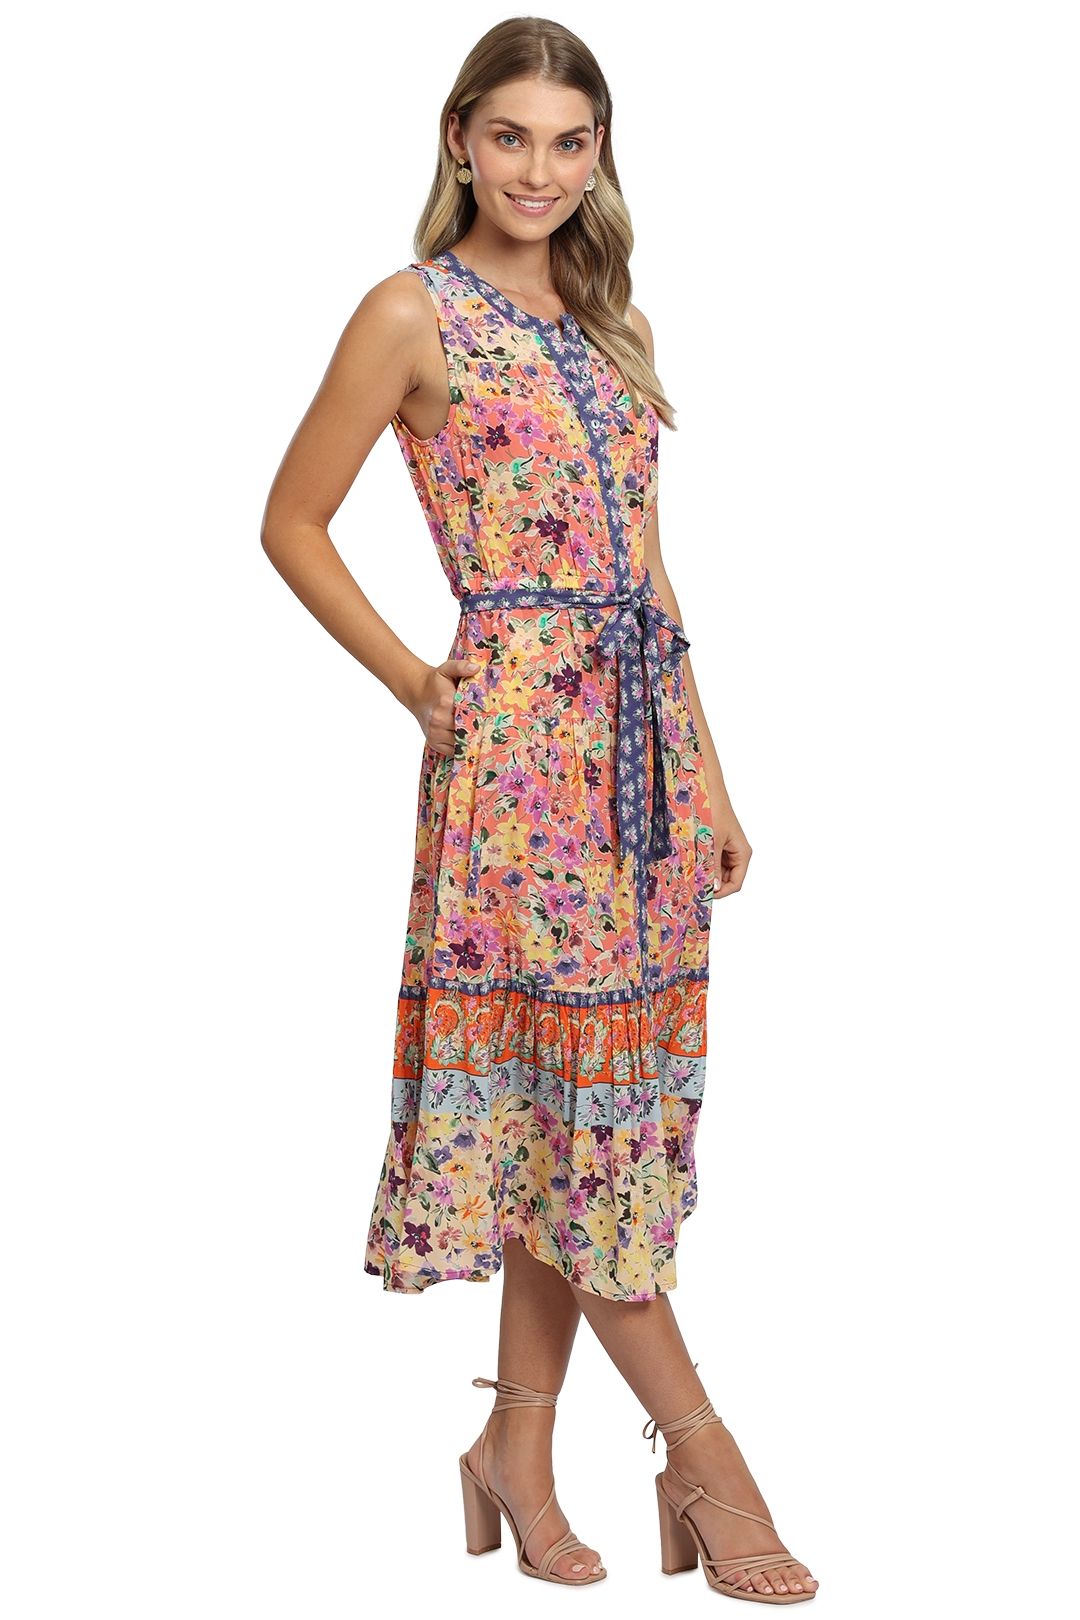 Kachel Allie Dress Floral